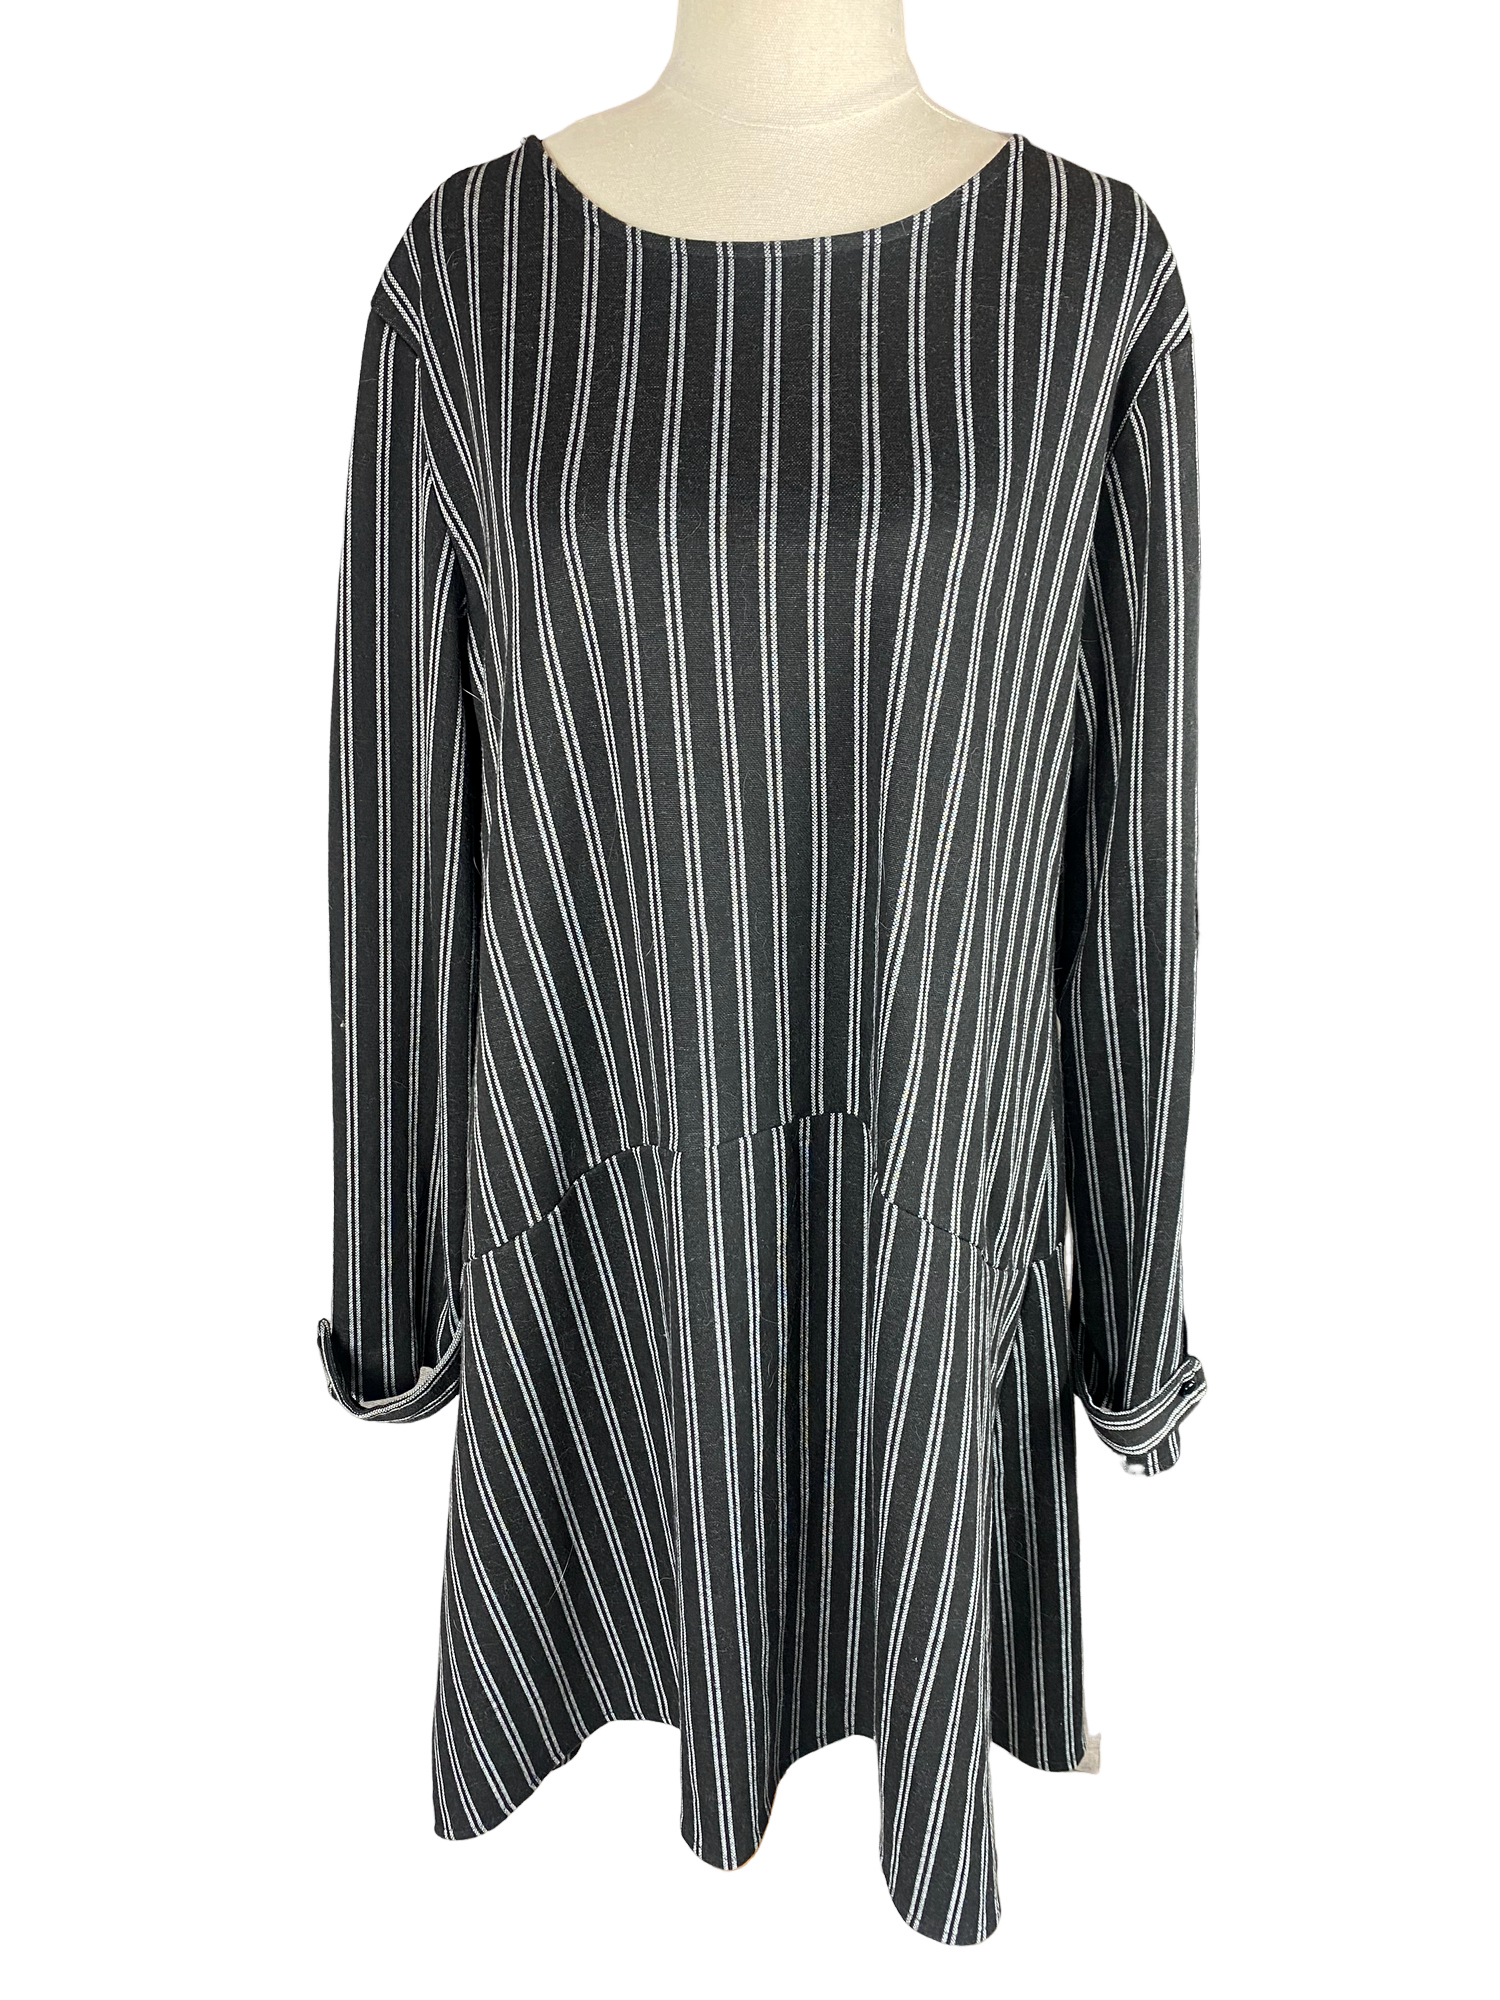 Brave + True black and white stripe dress | size 14